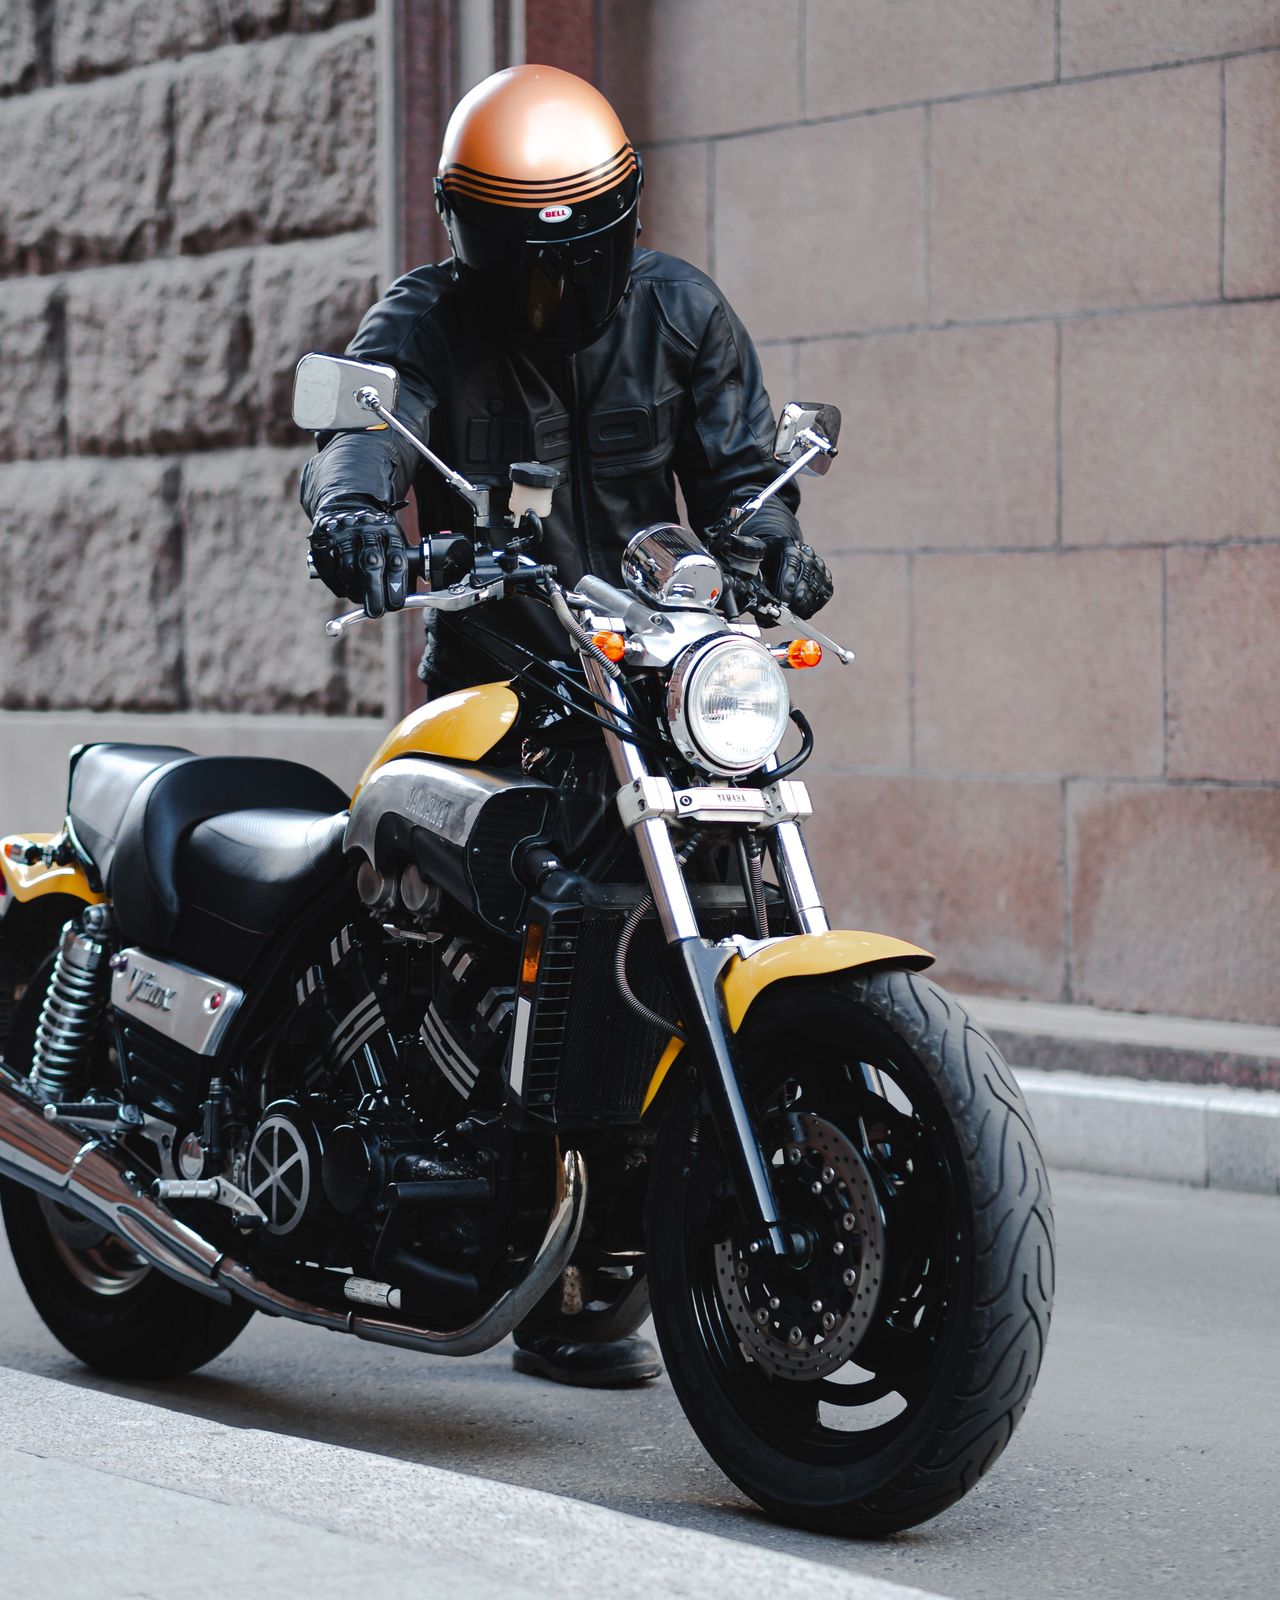 EndoGear Motorcycle Protective Gear